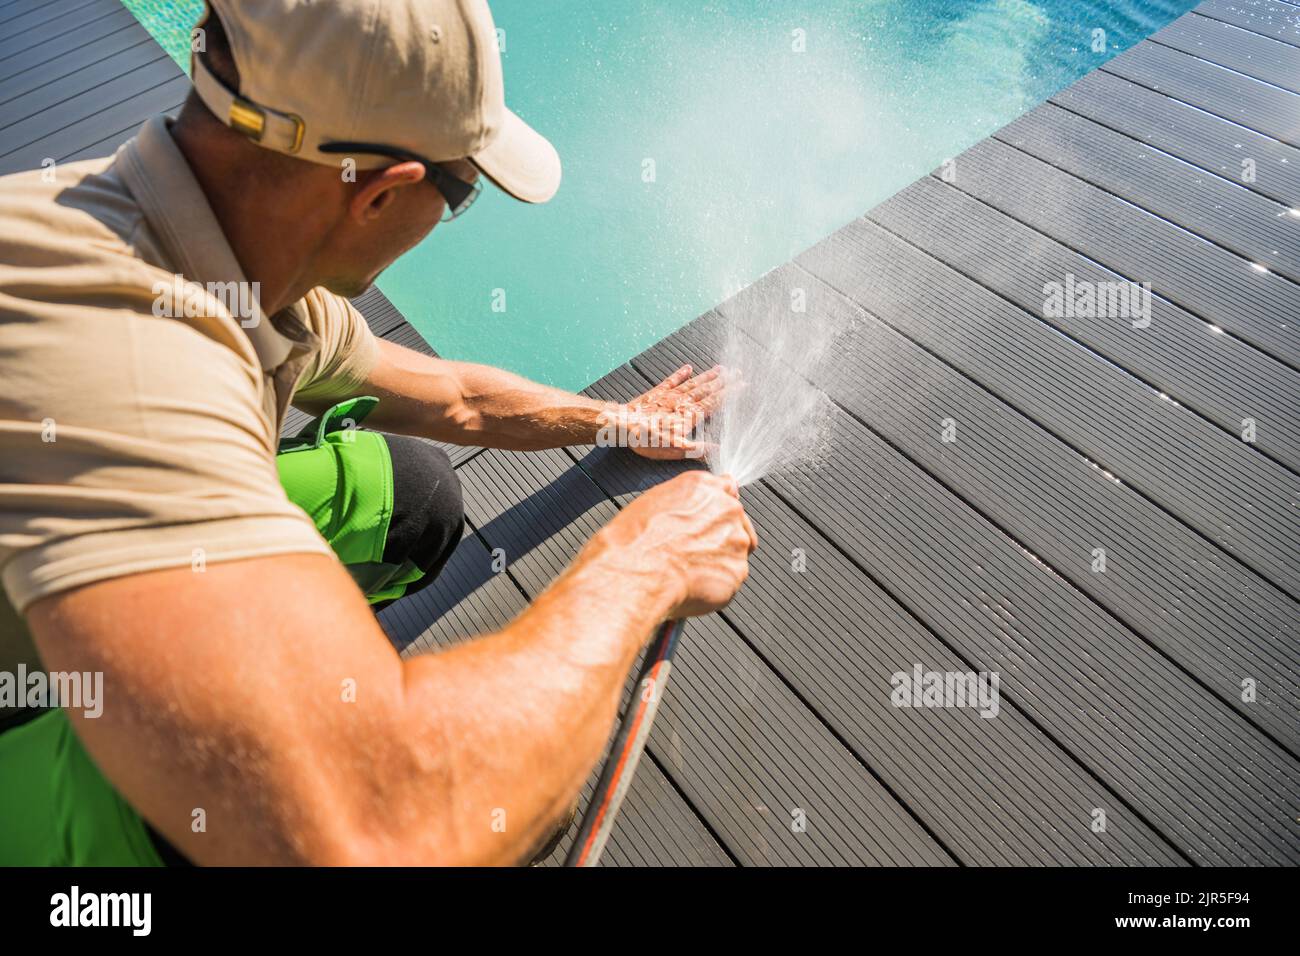 Caucasian Men Washing His Composite Material Made Swimming Pool Deck Using Garden Hose. Pool Surrounding Maintenance. Stock Photo